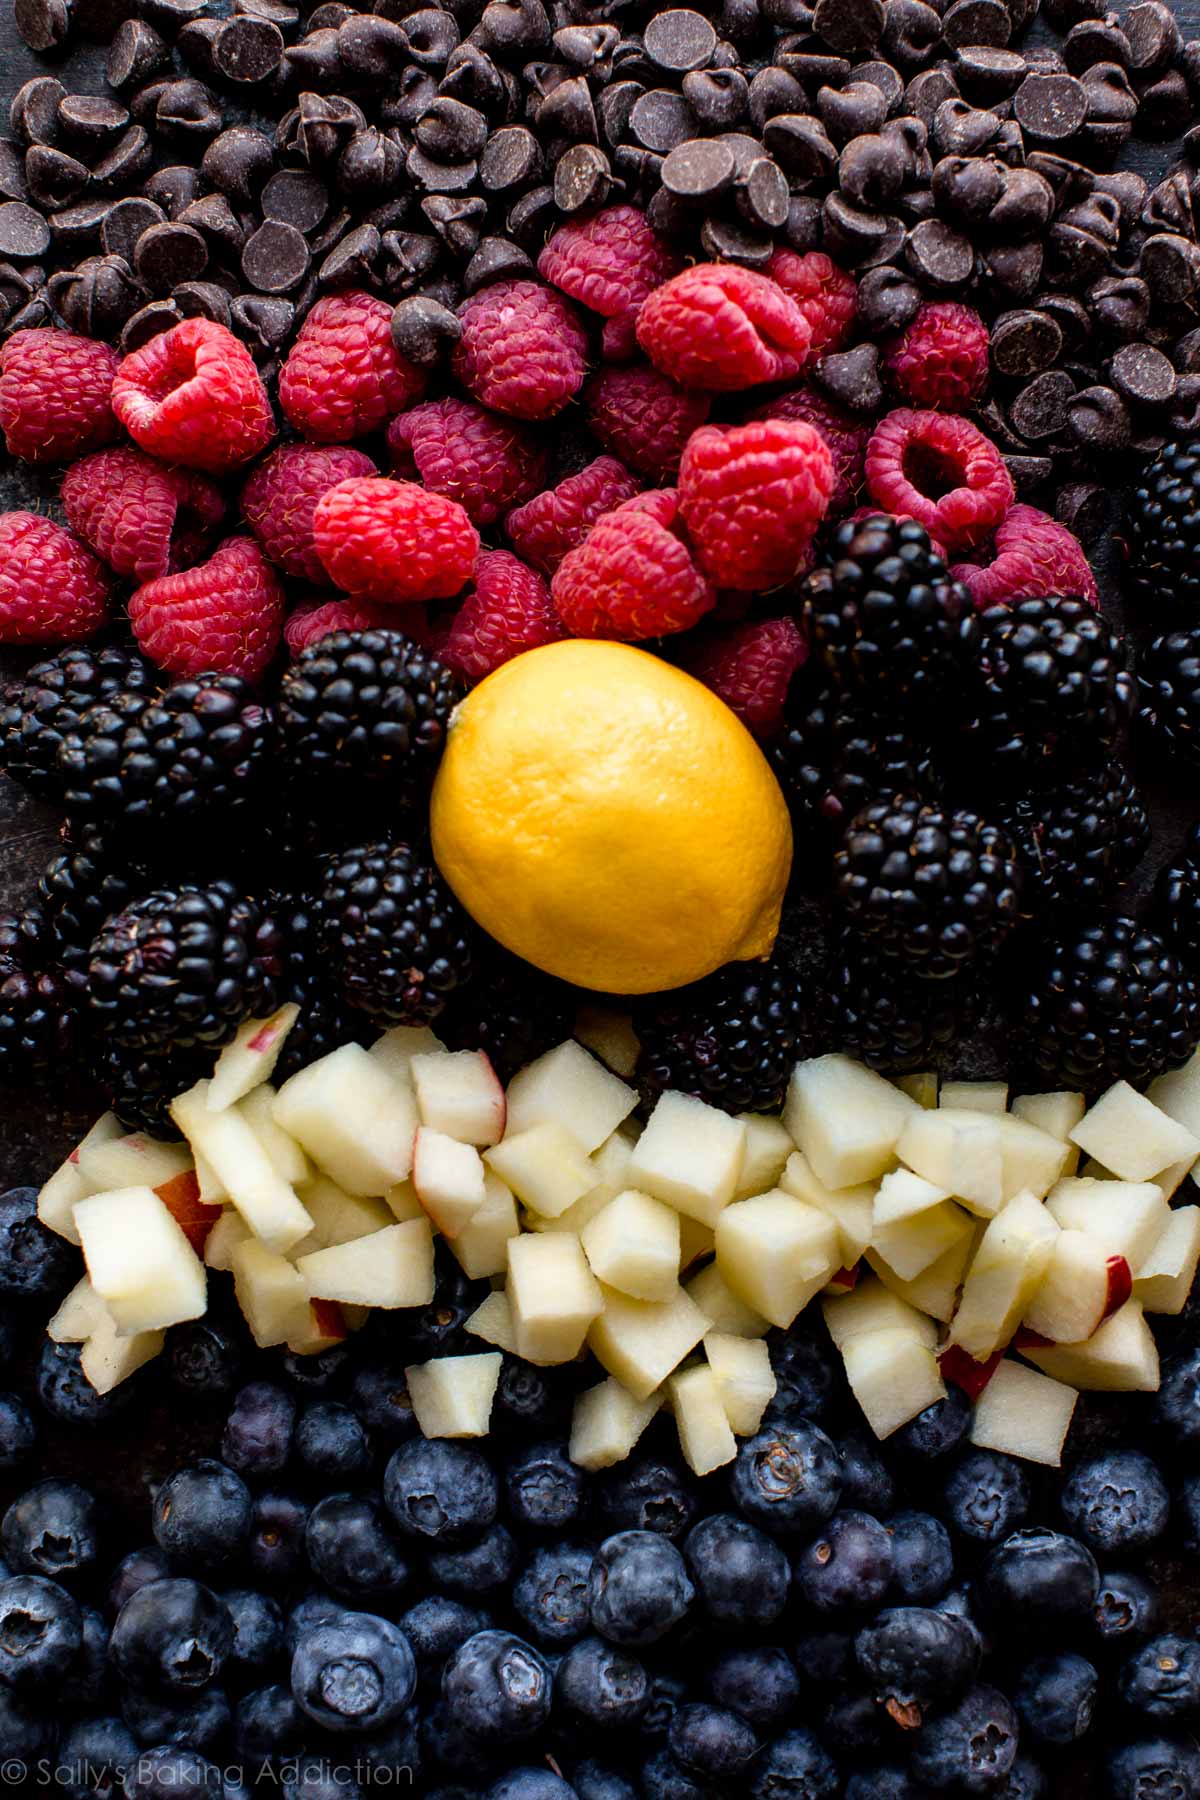 overhead image of various ingredients for muffins including chocolate chips, raspberries, blackberries, lemon, apple chunks, and blueberries